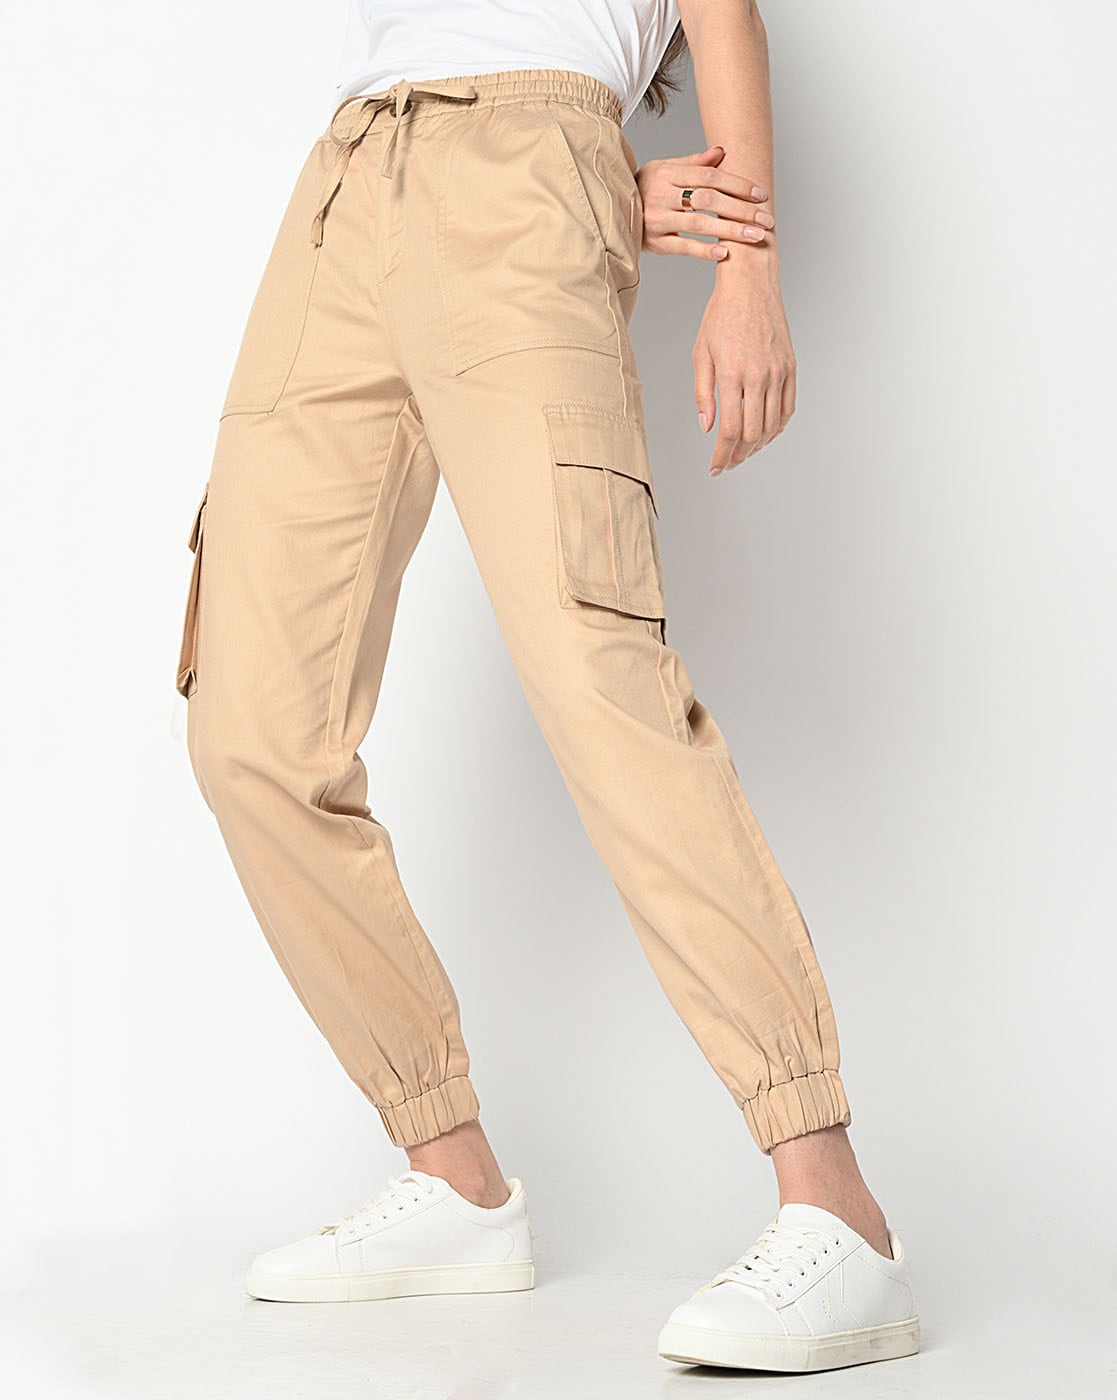 Buy Olive Green Shorts  34ths for Men by DNMX Online  Ajiocom